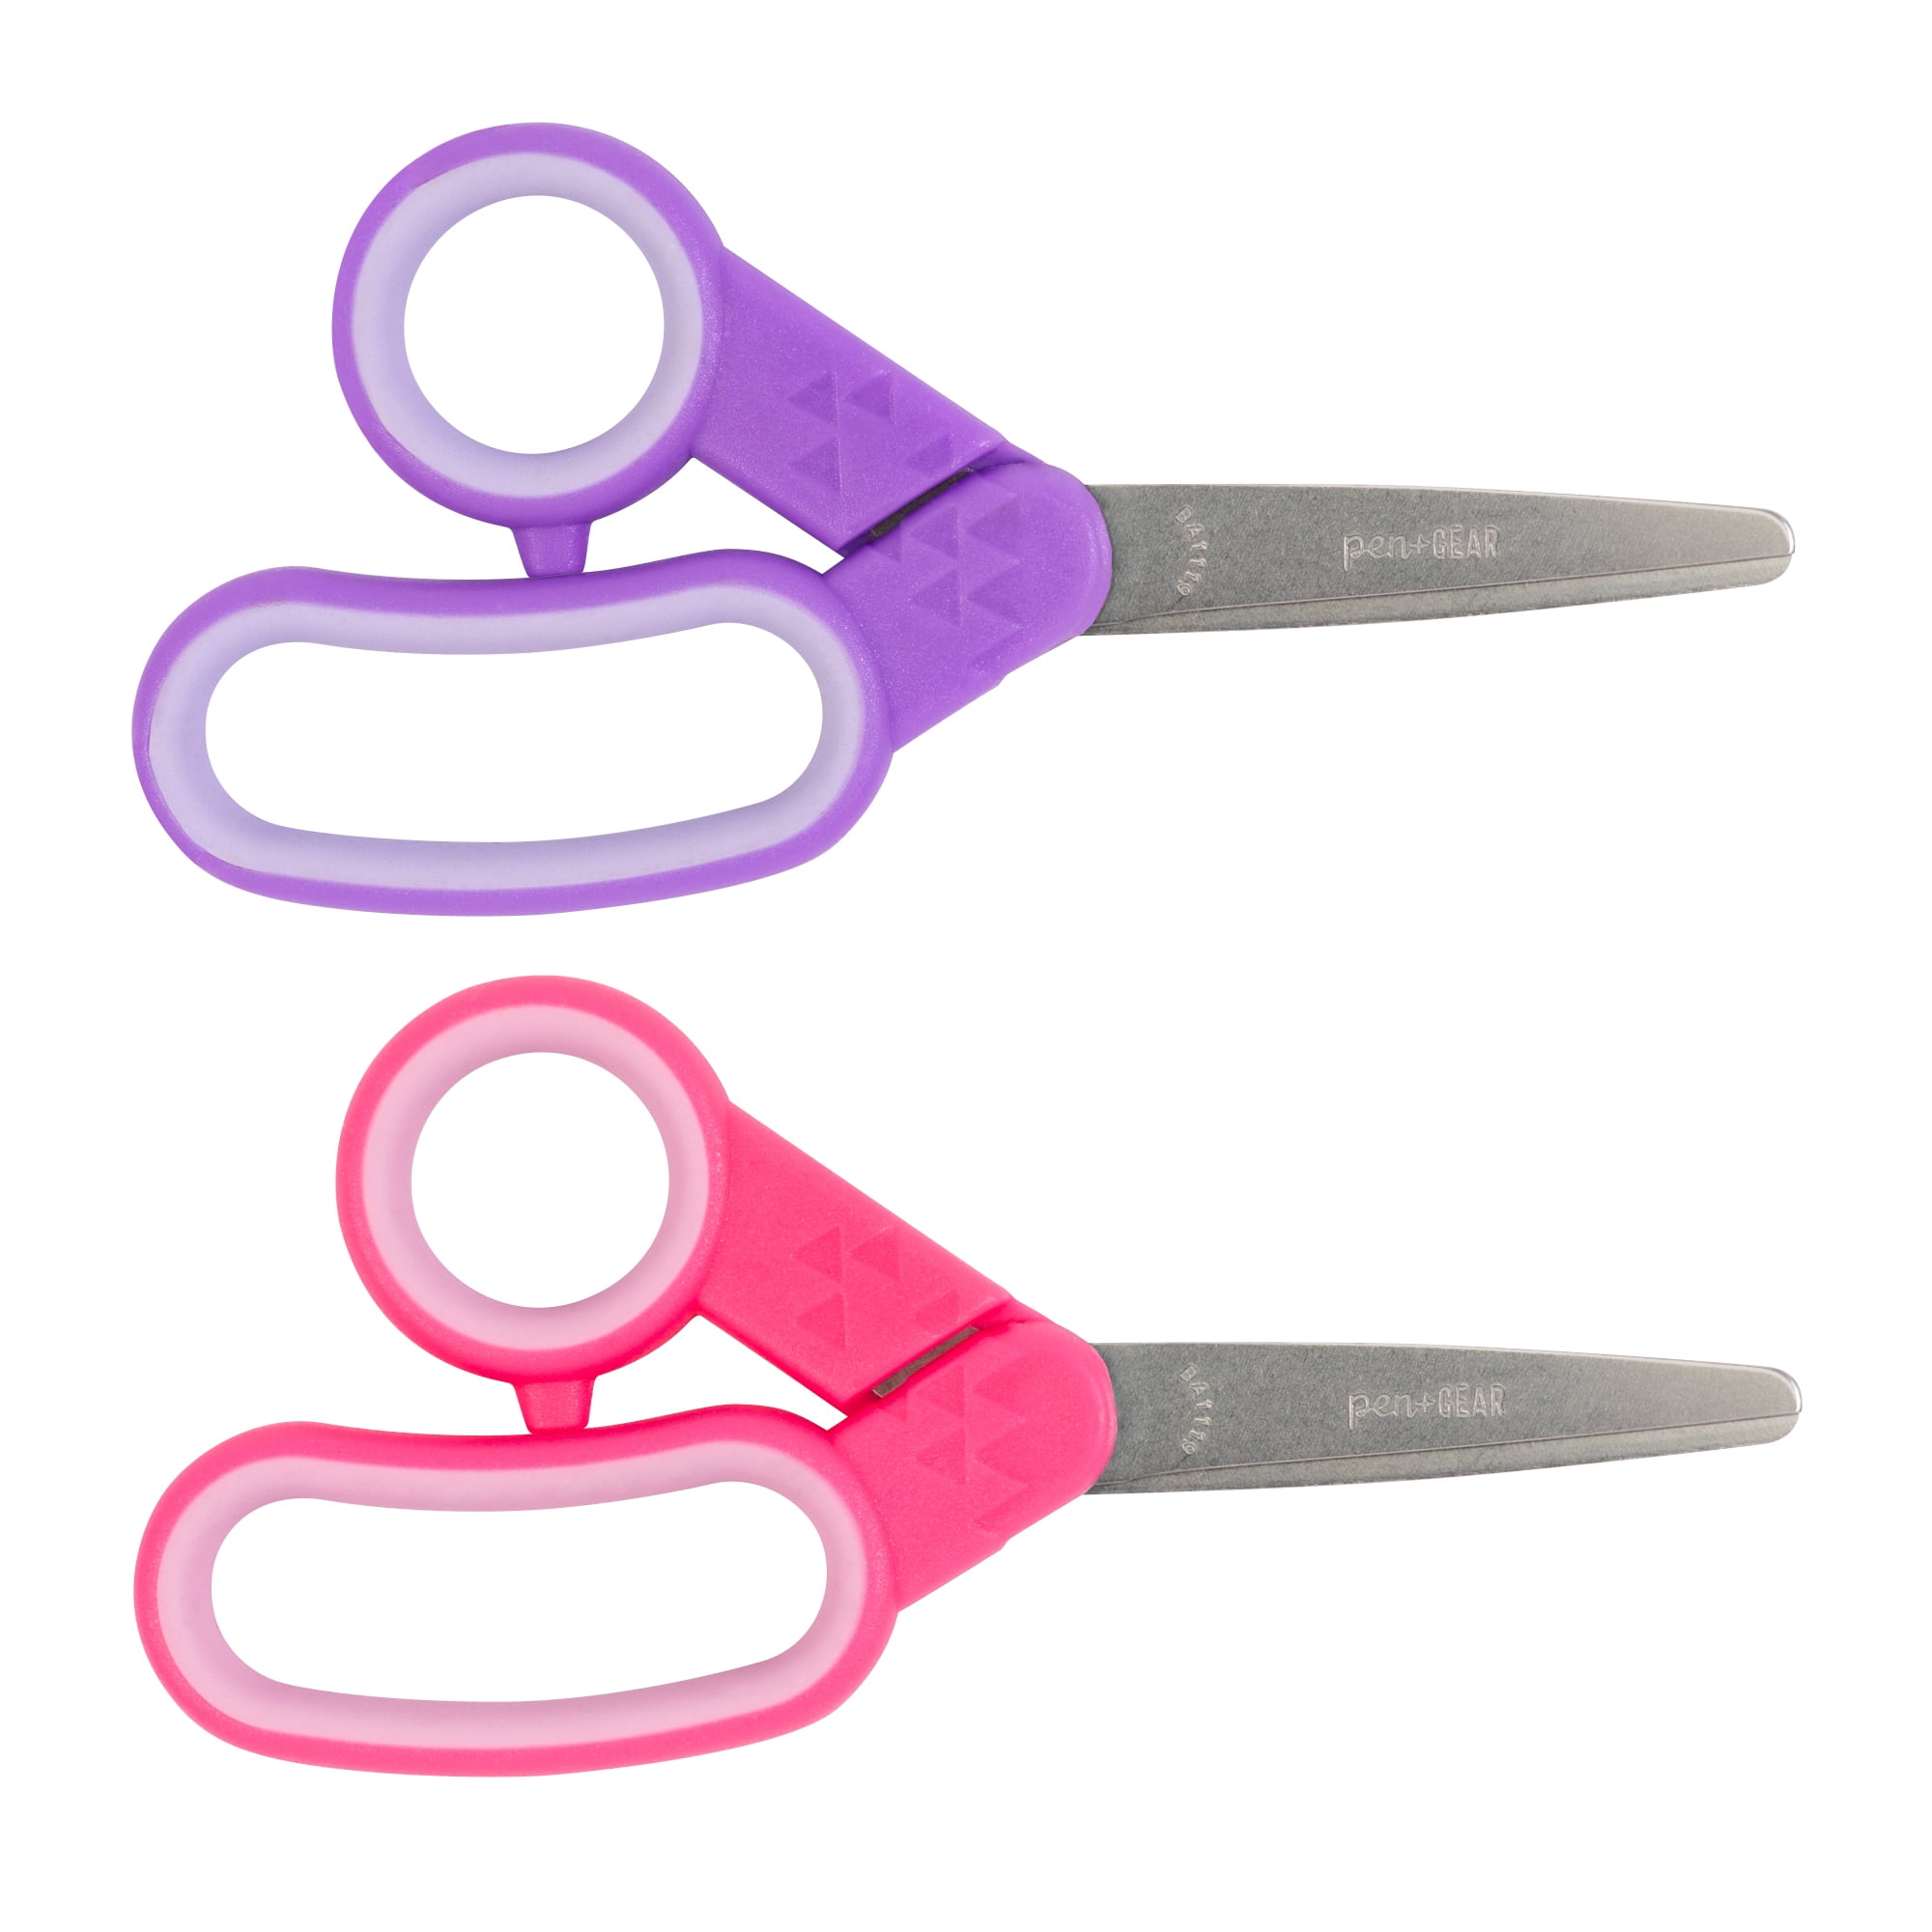 Pen+Gear 5 Inch Blunt Scissors 2 Pack, Pink and Purple